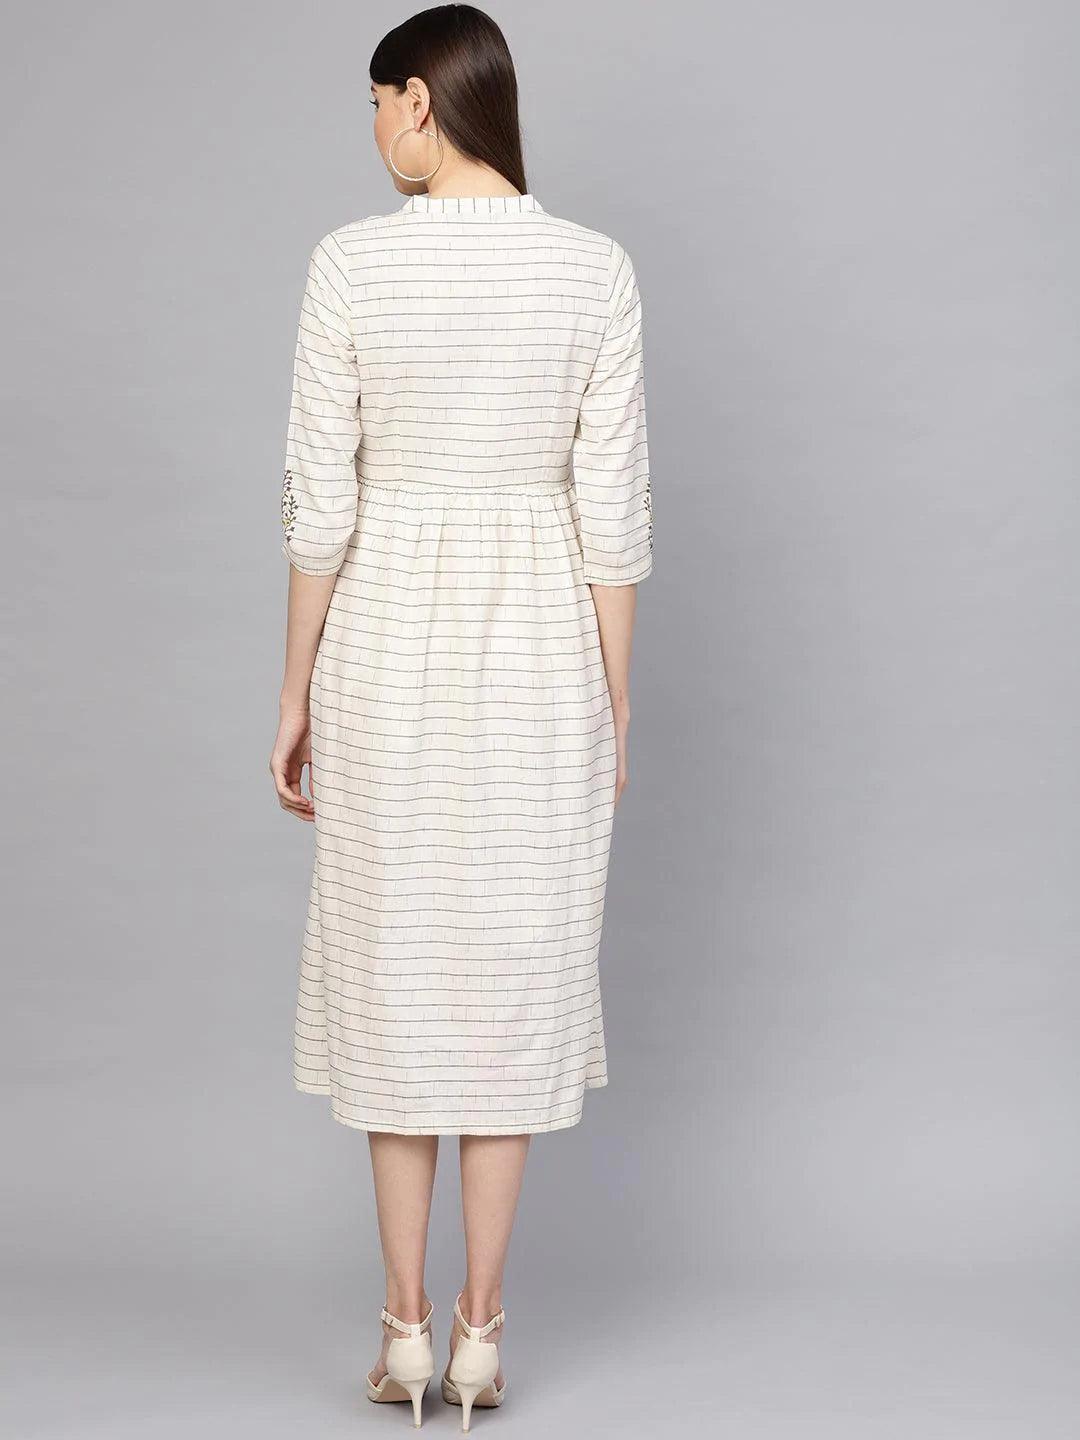 White Printed Cotton Dress